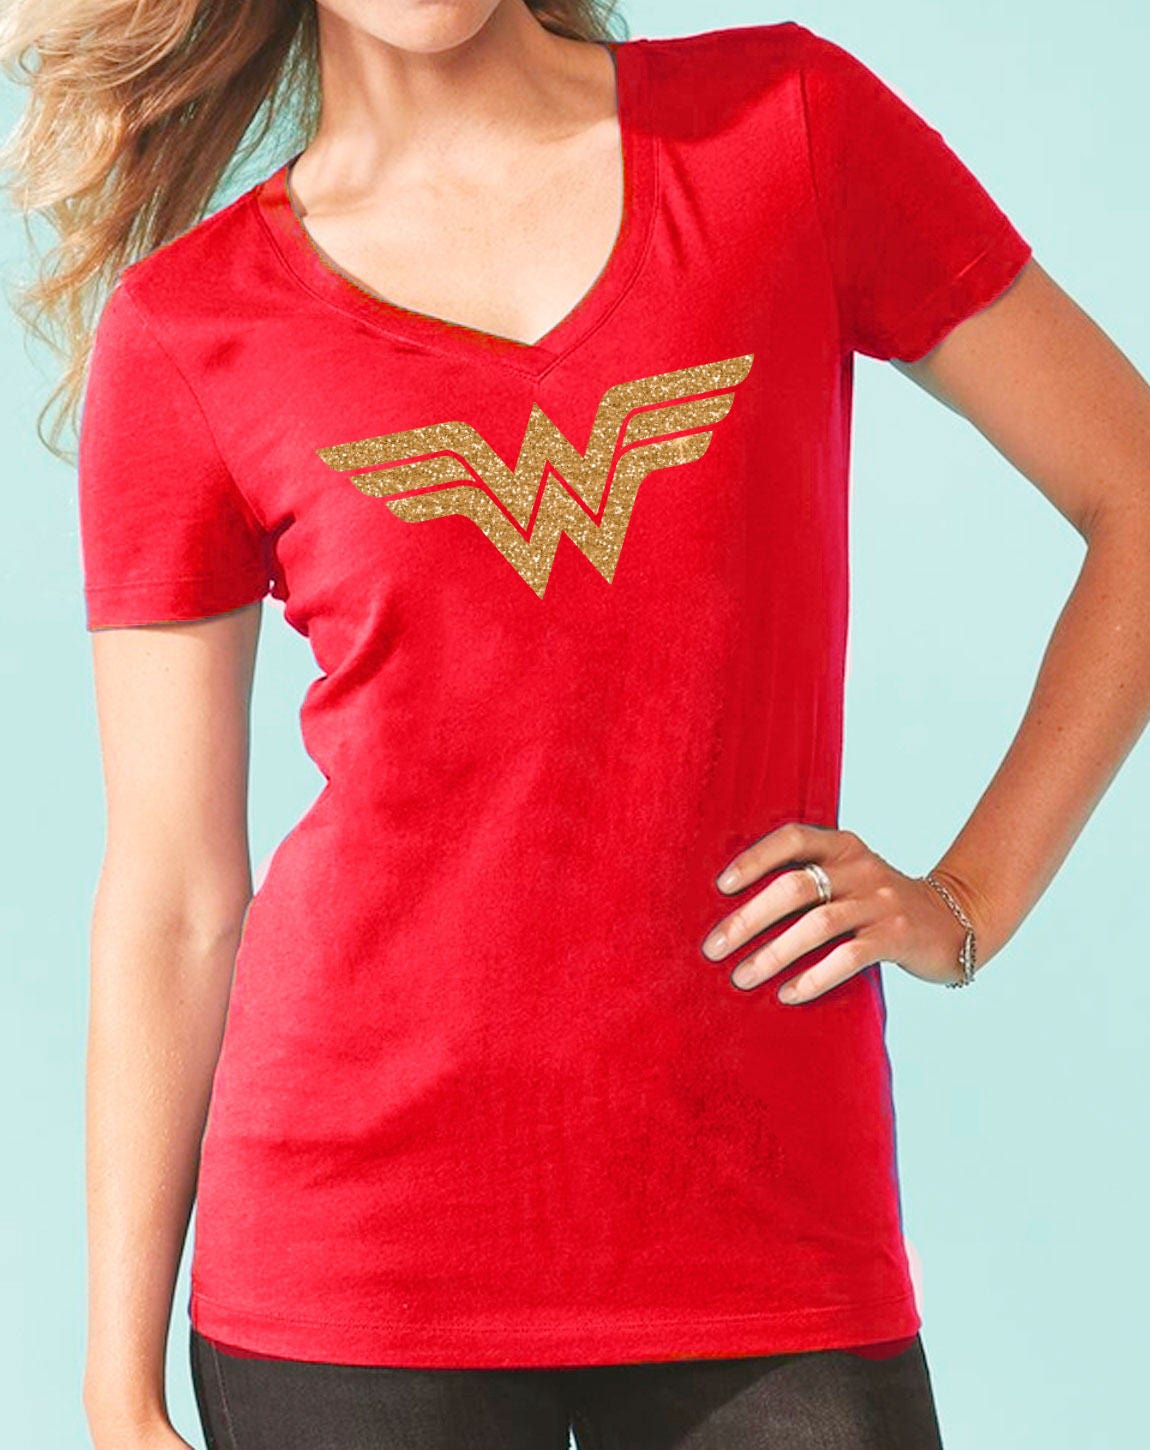 Super hero tshirt, Wonder woman Inspired, Custom wonder woman Shirt, Gold Glitter, Bright Red T-shirt, super hero for ladies